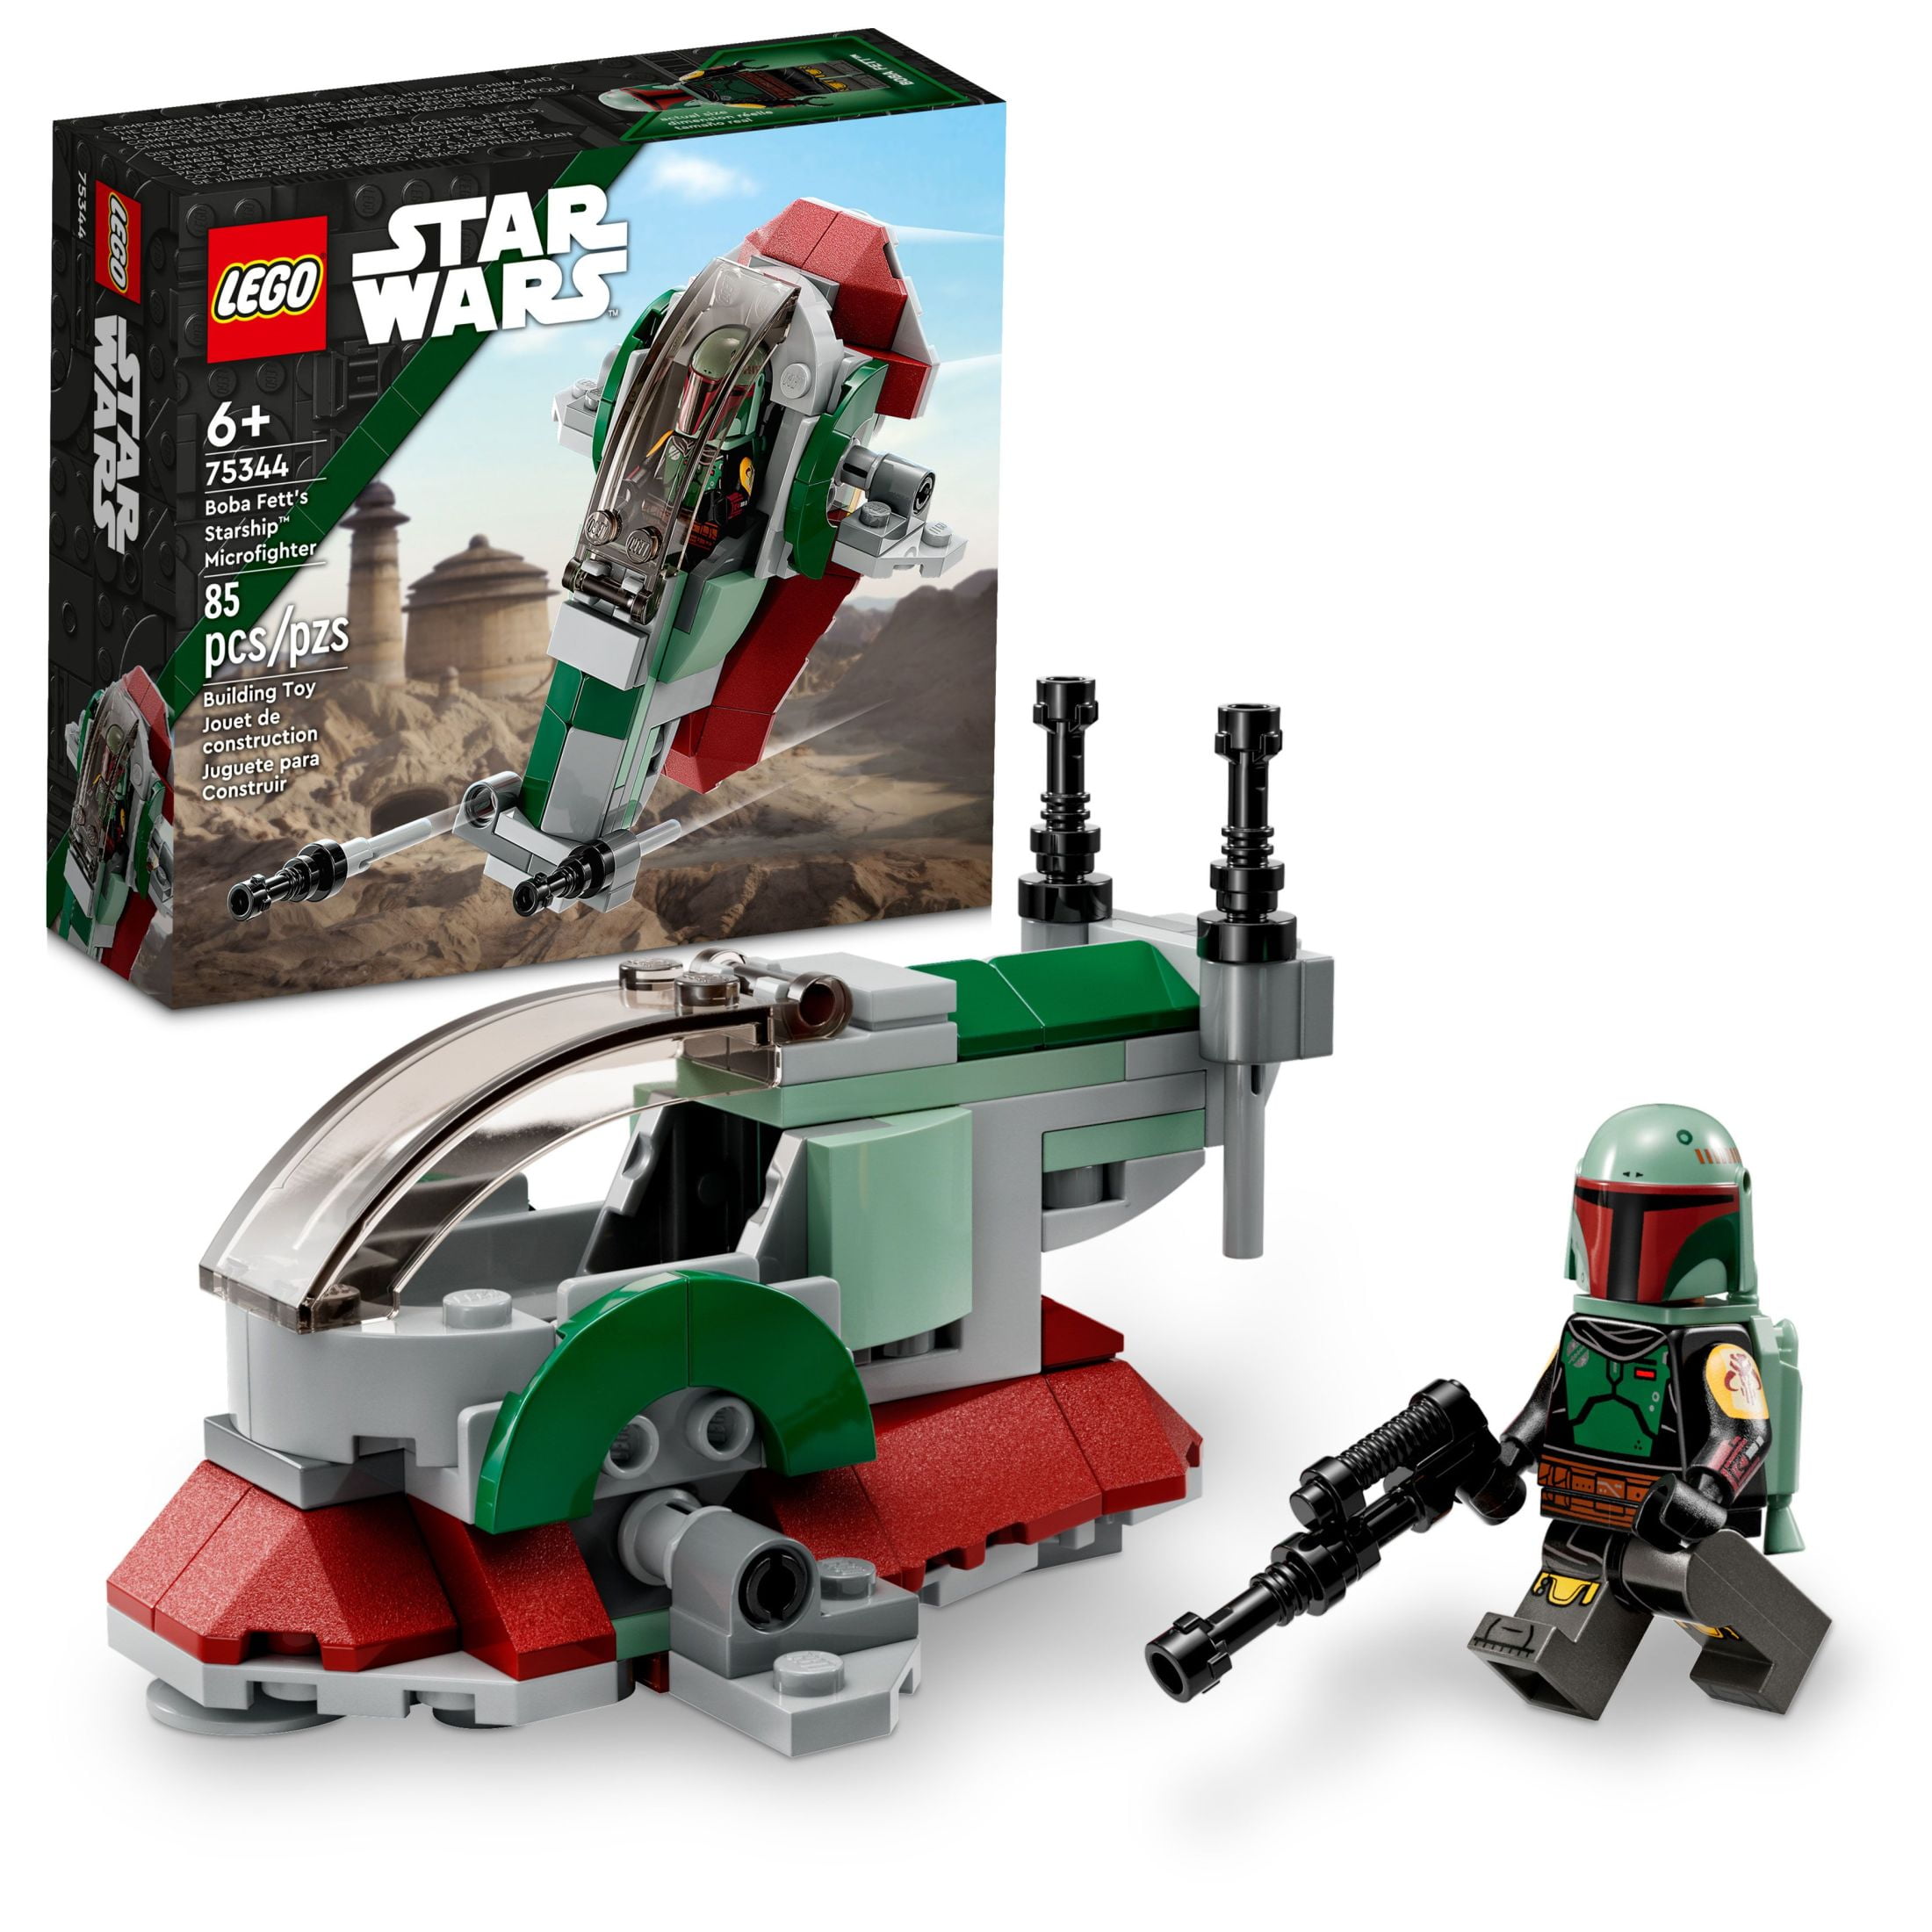 LEGO Star Wars Boba Fett's Starship Microfighter Set 75344 $7.12